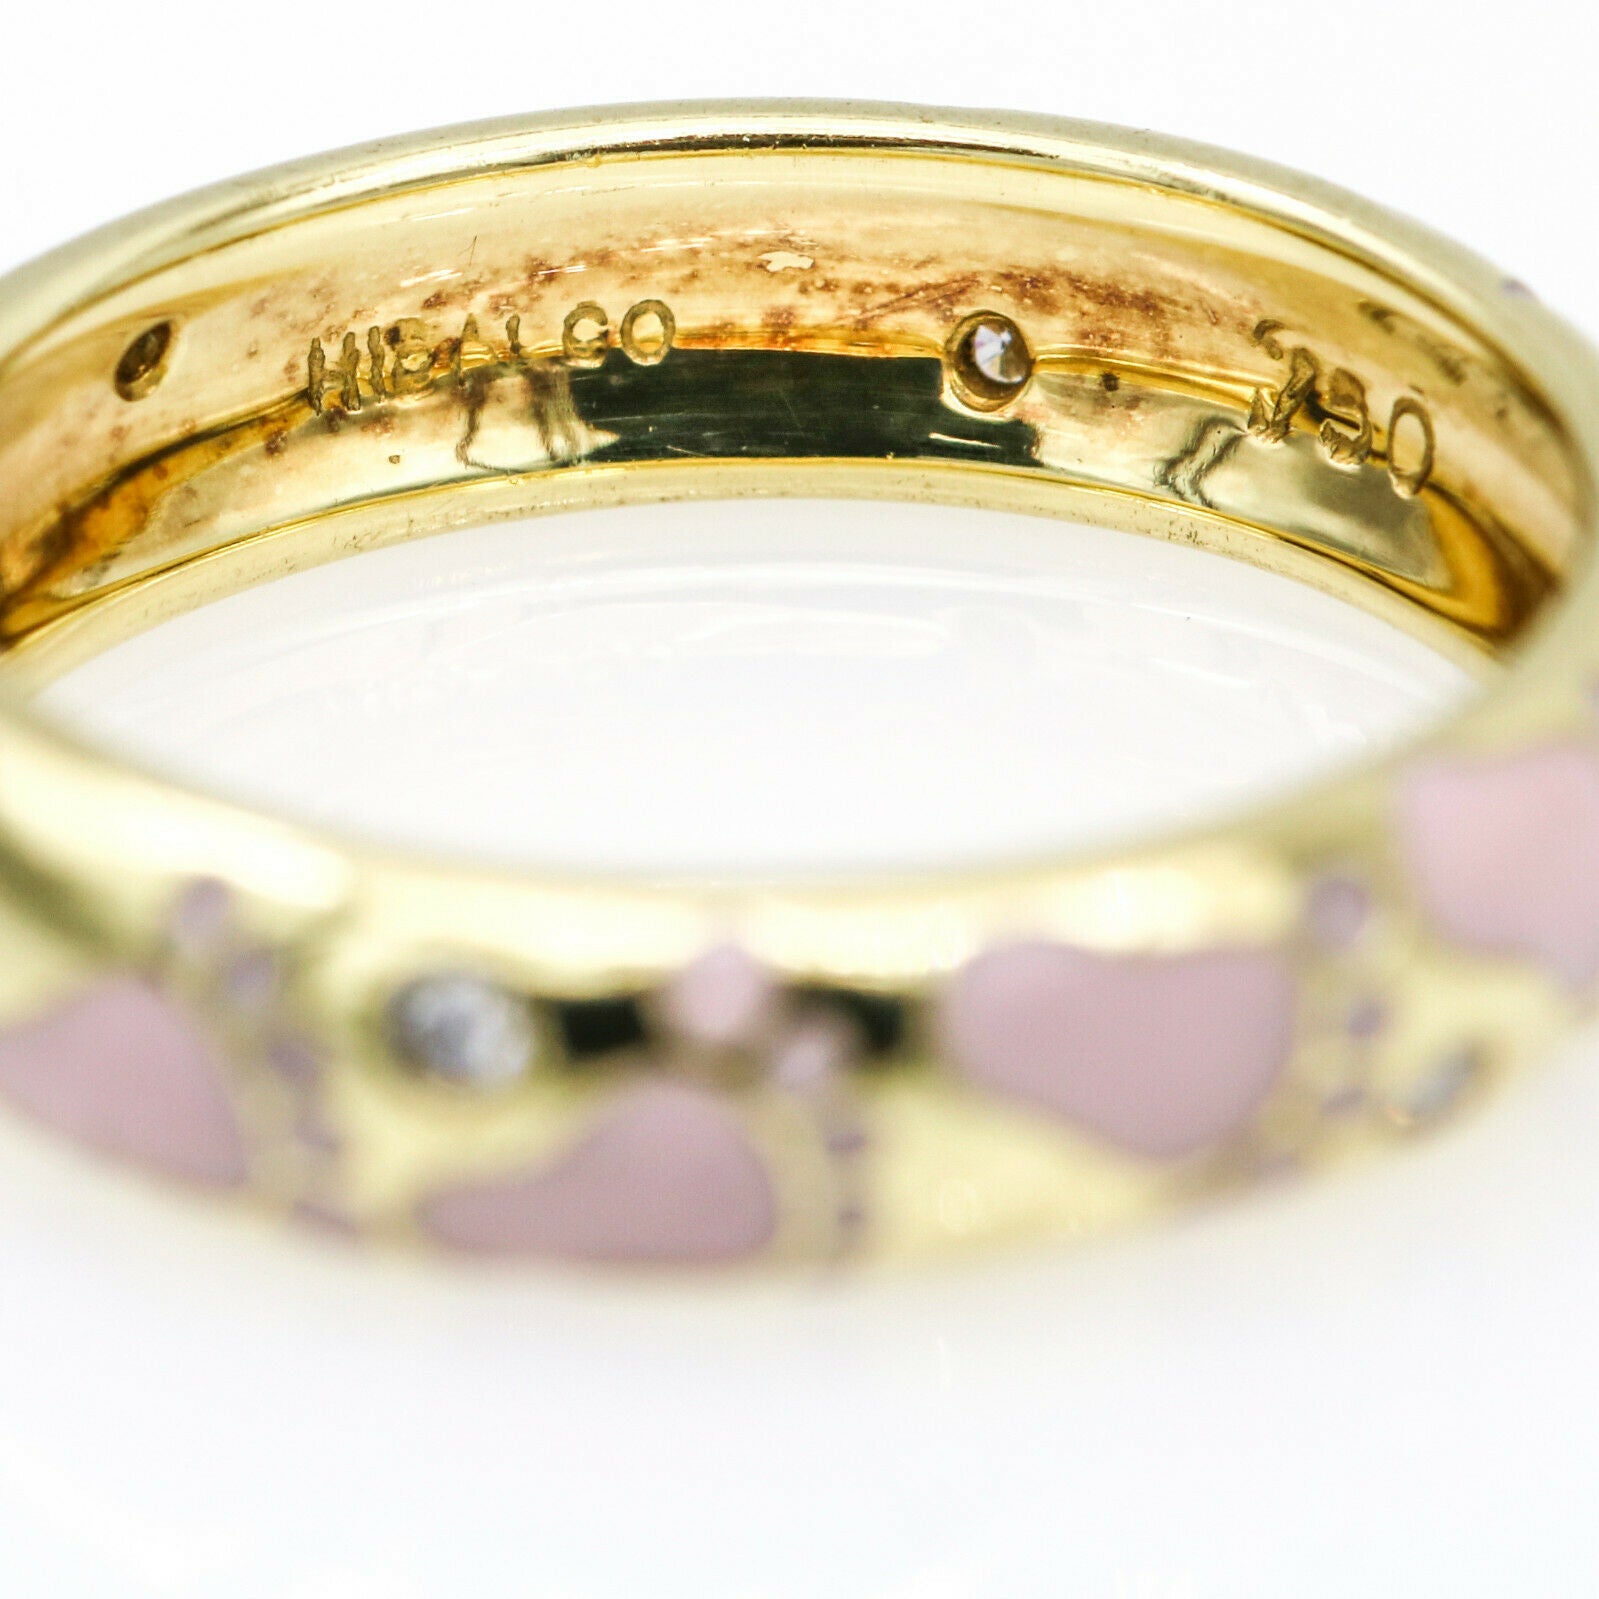 Hidalgo Pink Enamel and Diamond Footprints Band Ring in 18k Yellow Gold